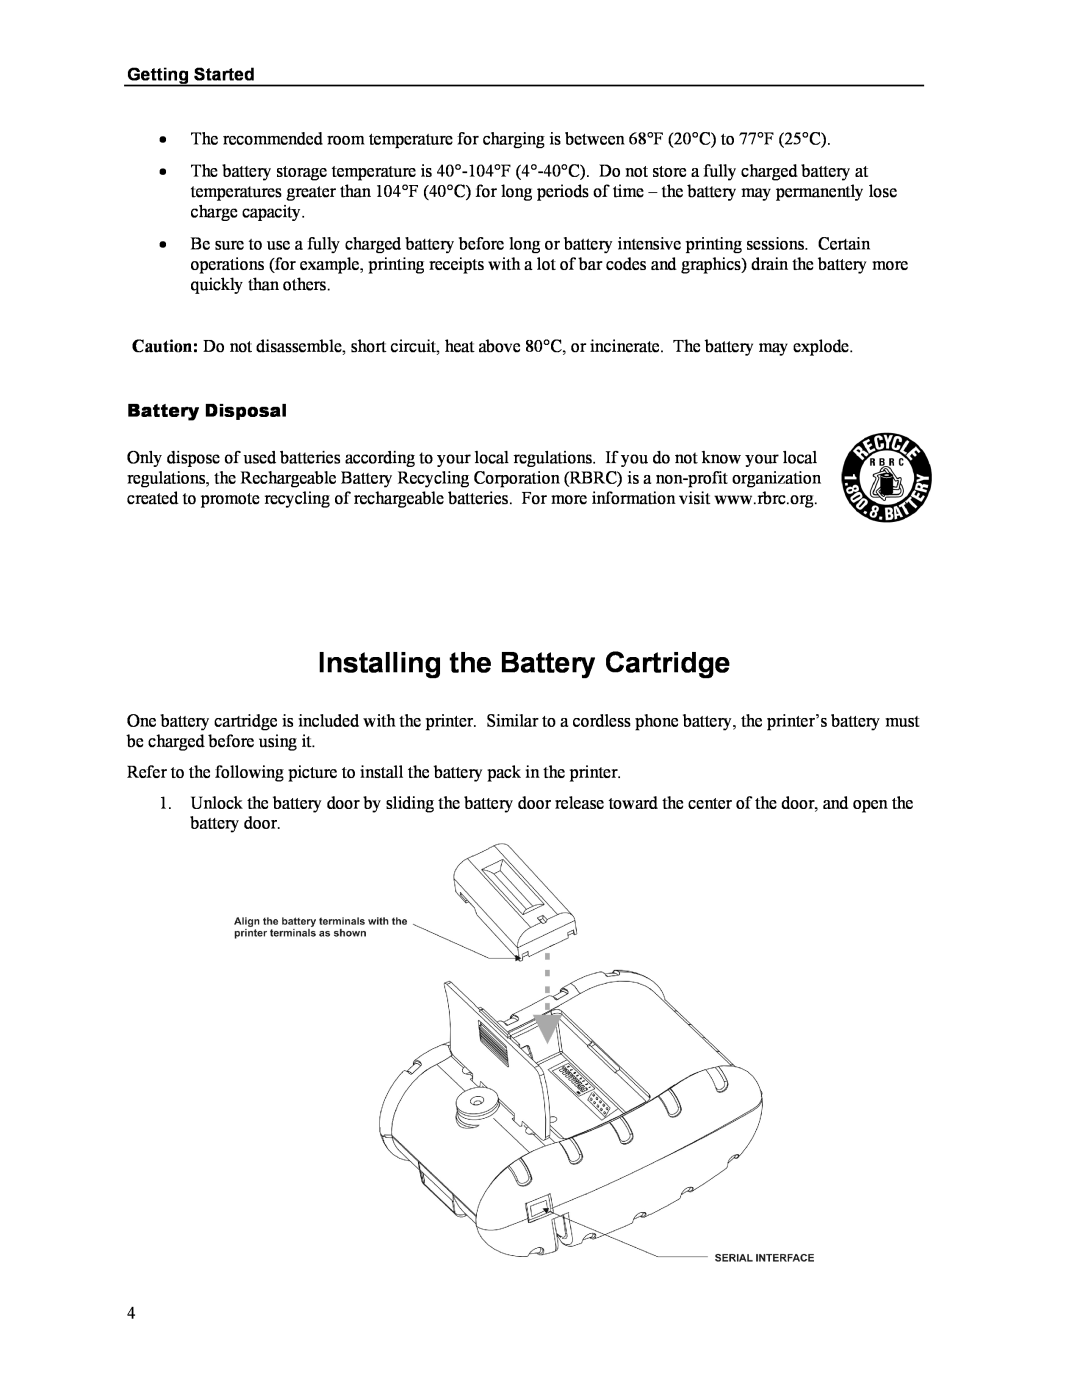 Printek Mt3-II manual Installing the Battery Cartridge, Getting Started, Battery Disposal 